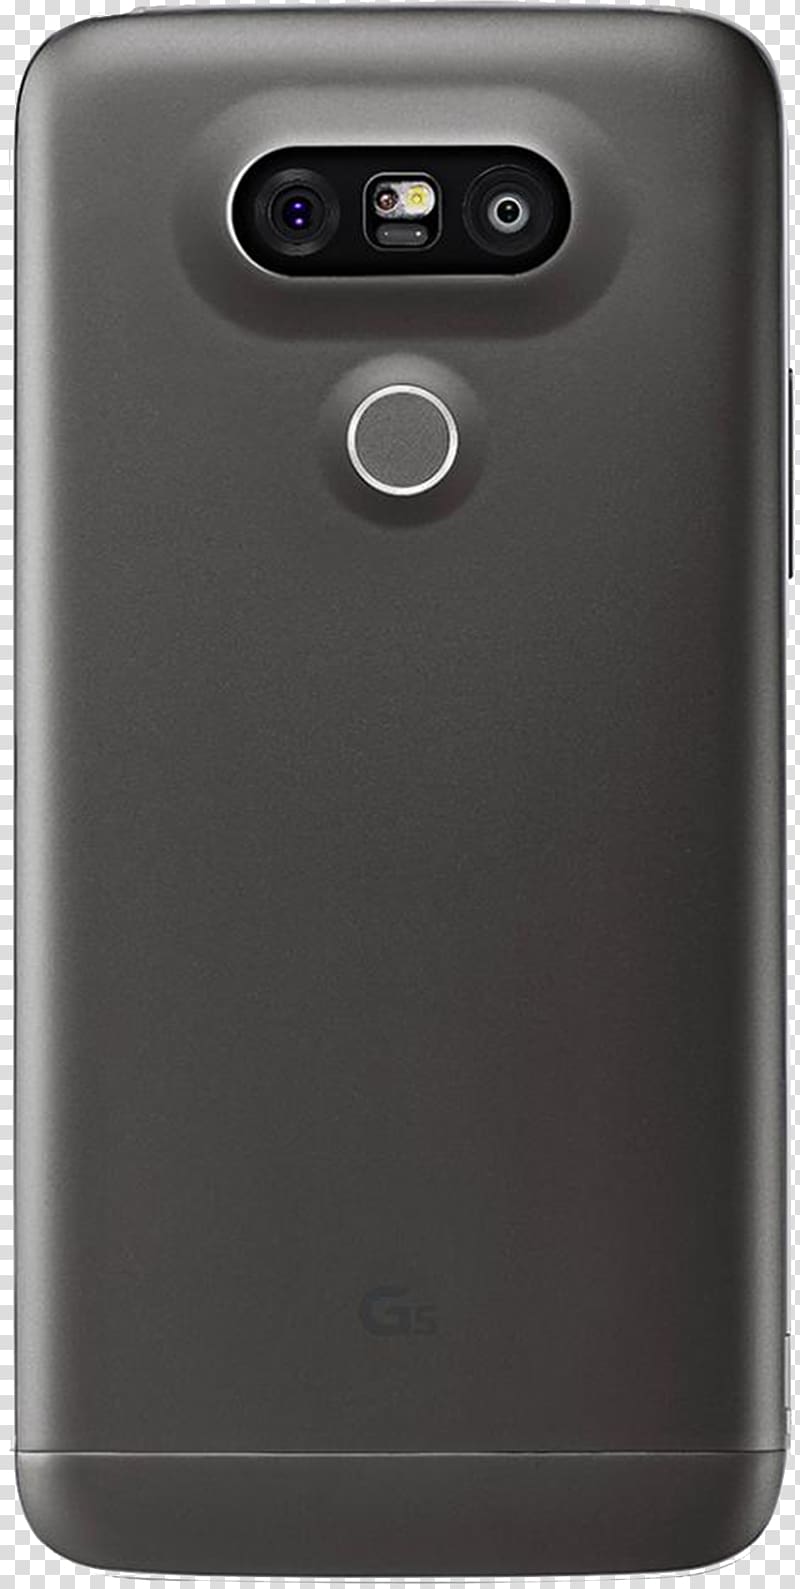 LG G5 SE LG K10 Smartphone LG Electronics Samsung Galaxy S7, smartphone transparent background PNG clipart